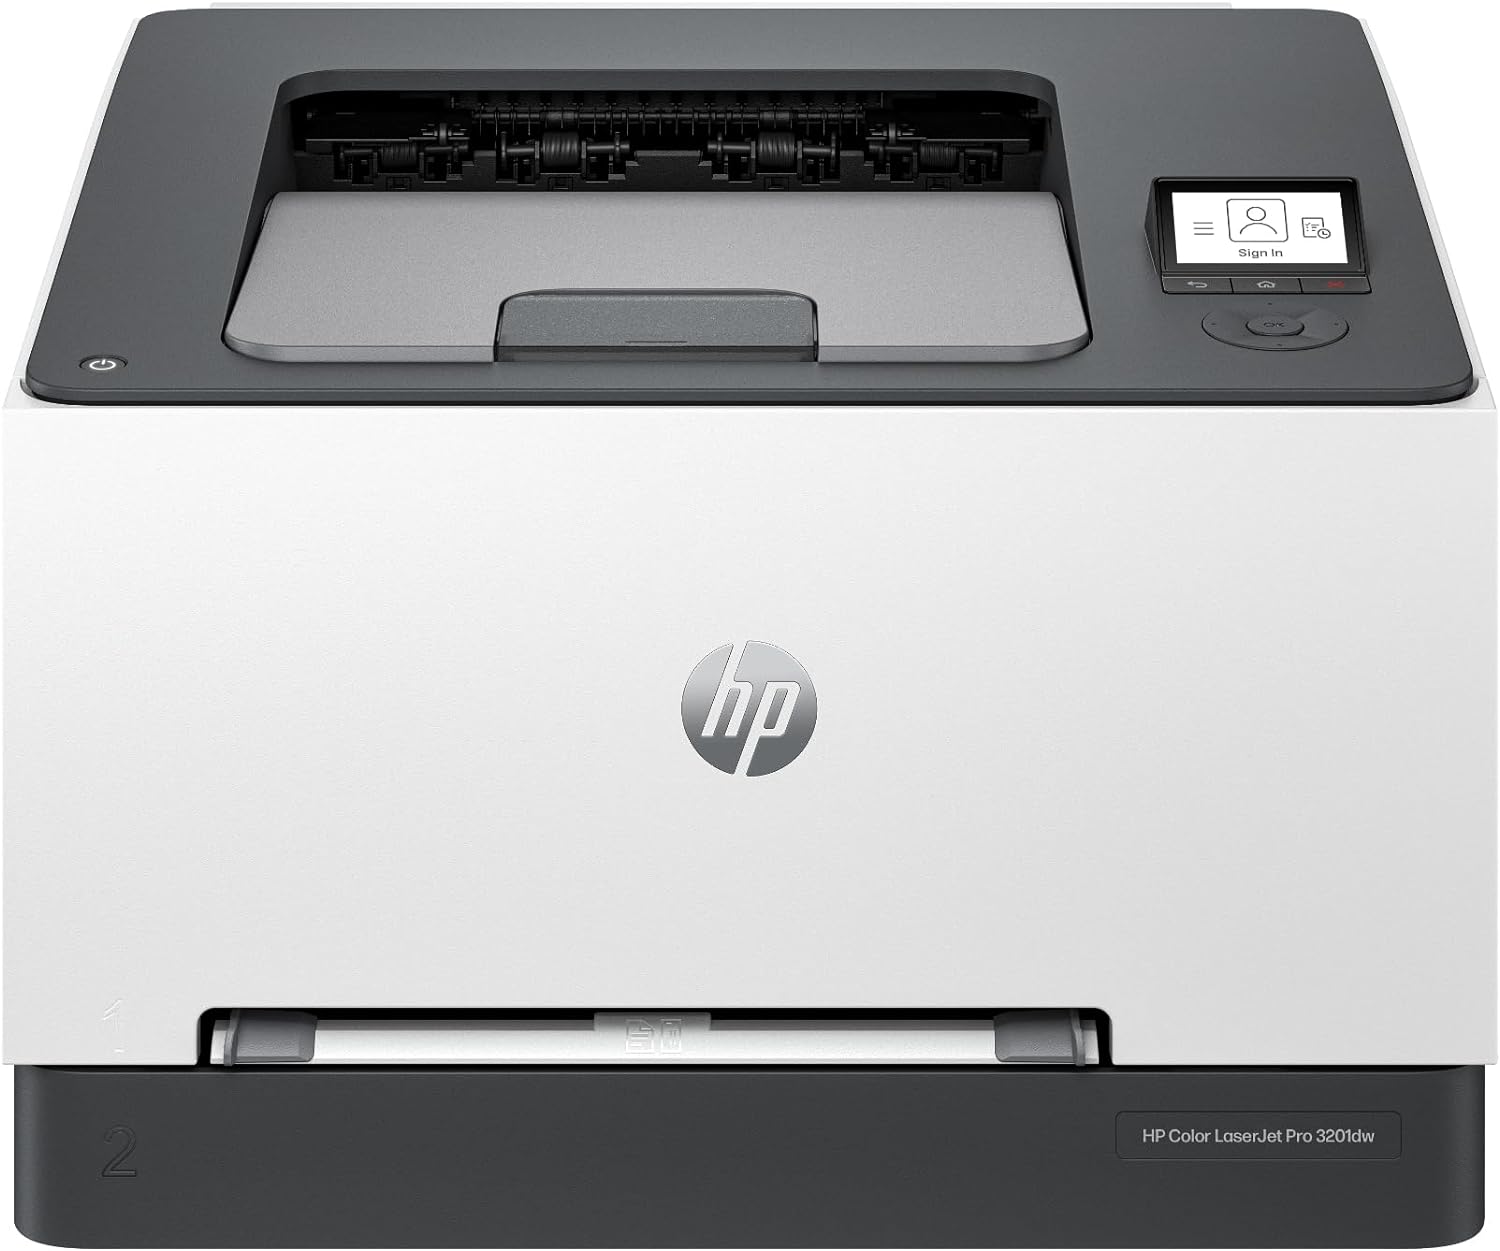 HP Color LaserJet Pro 3201dw printer toner